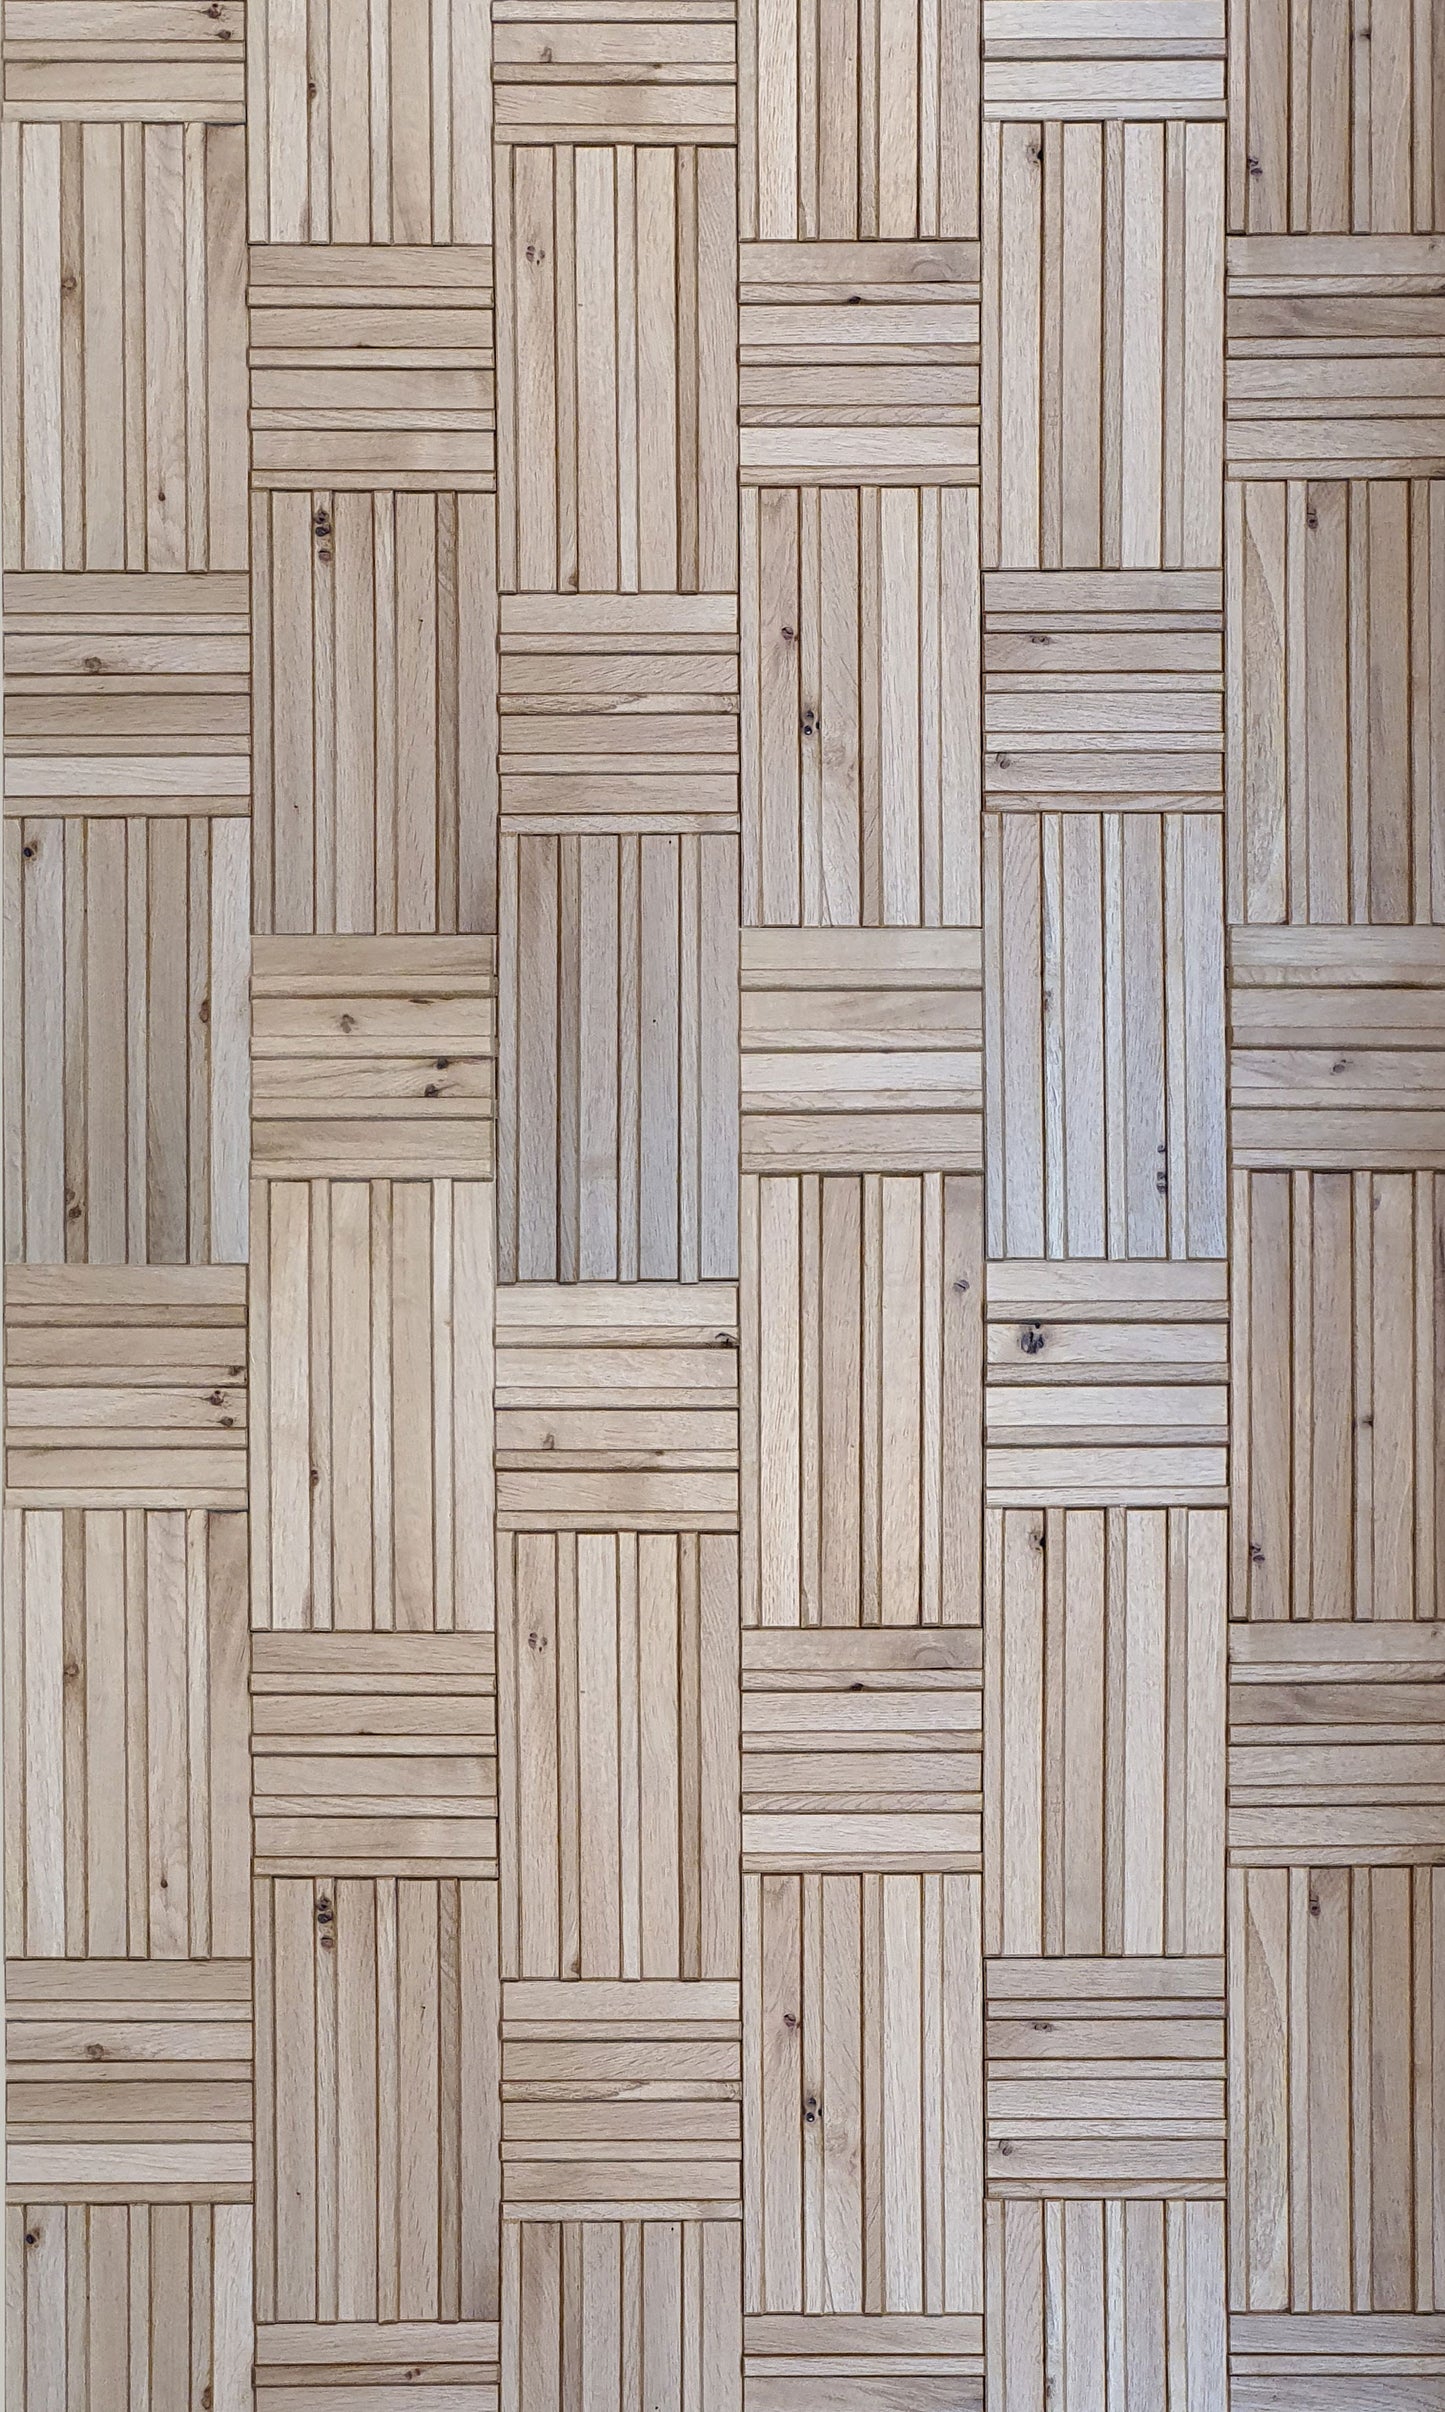 wood wall pattern 3d tile 